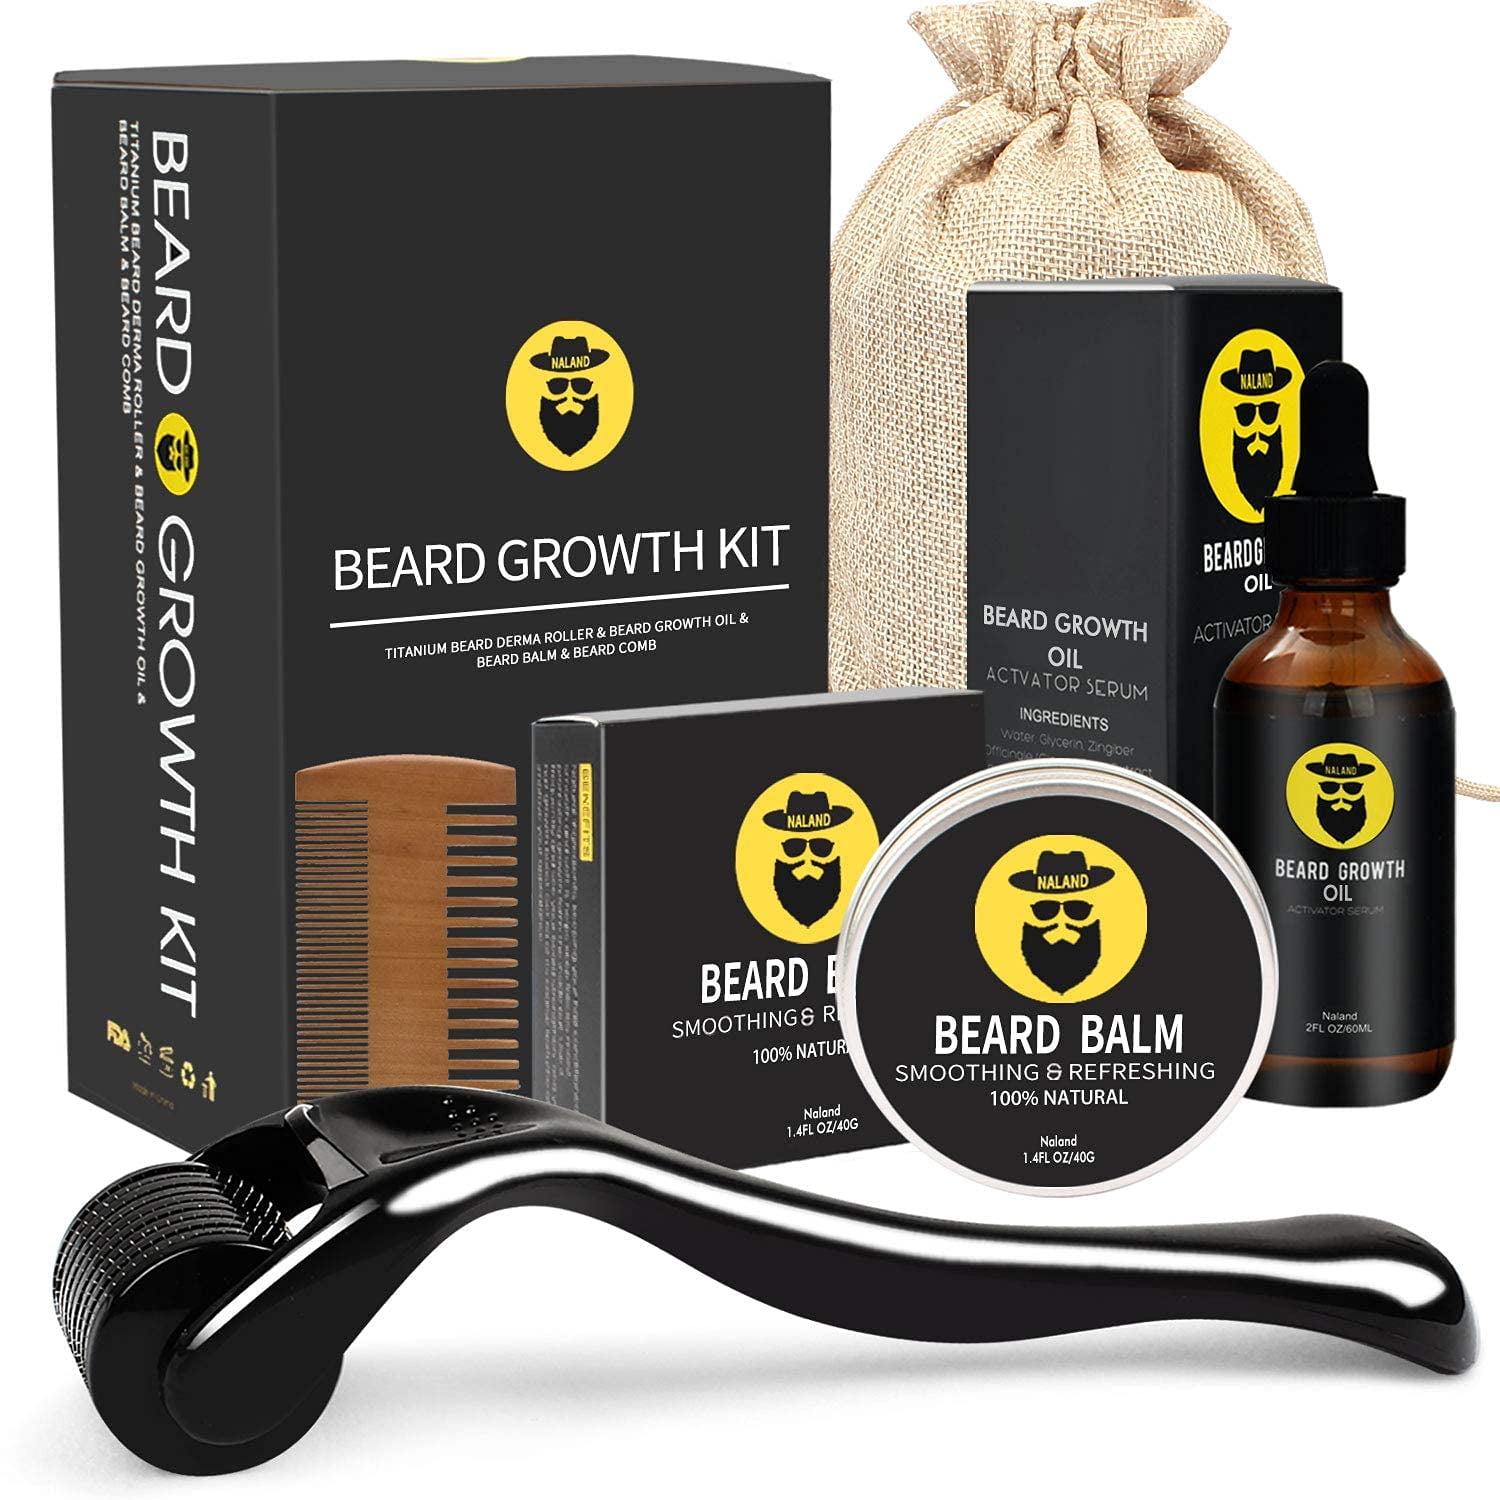 Beard Growth Kit - Derma Roller for Beard Growth, Beard Growth Serum Oil, Beard